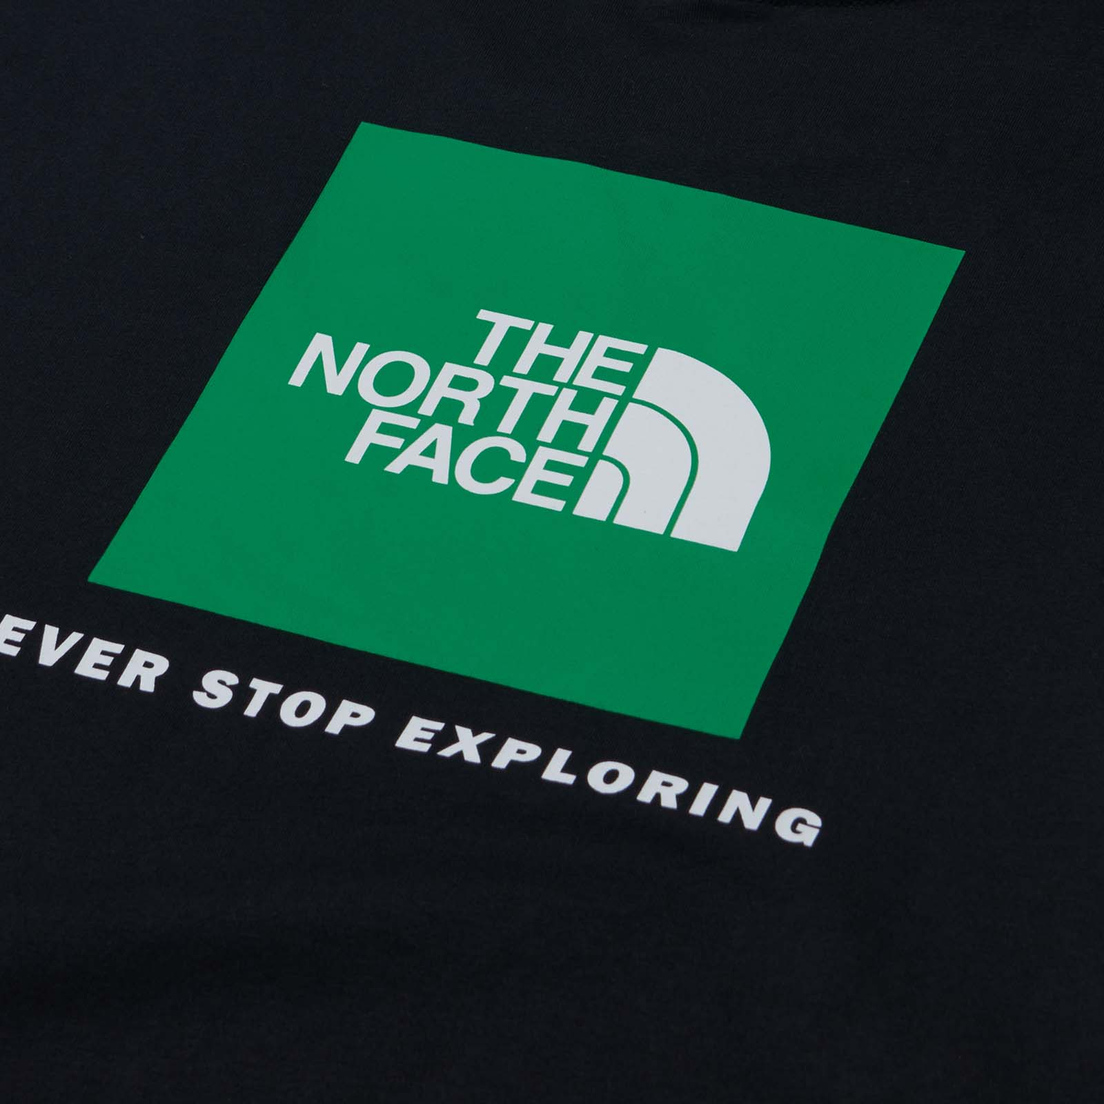 The North Face Мужская футболка Redbox Crew Neck